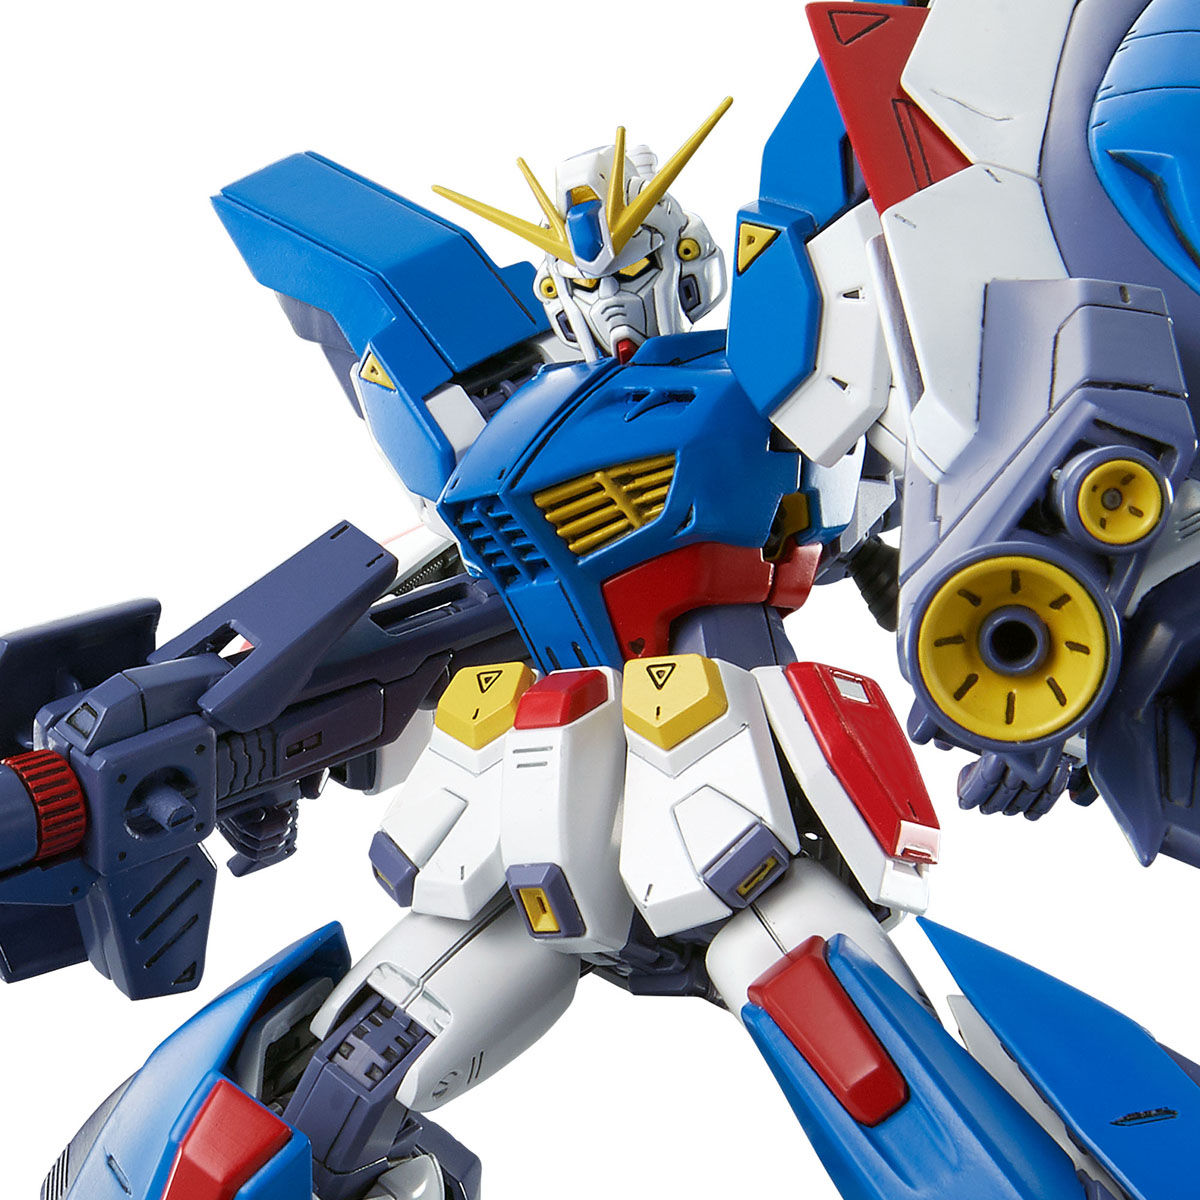 MG 1/100 Formula 90Ⅱ Gundam F90Ⅱ(Intercept Type)